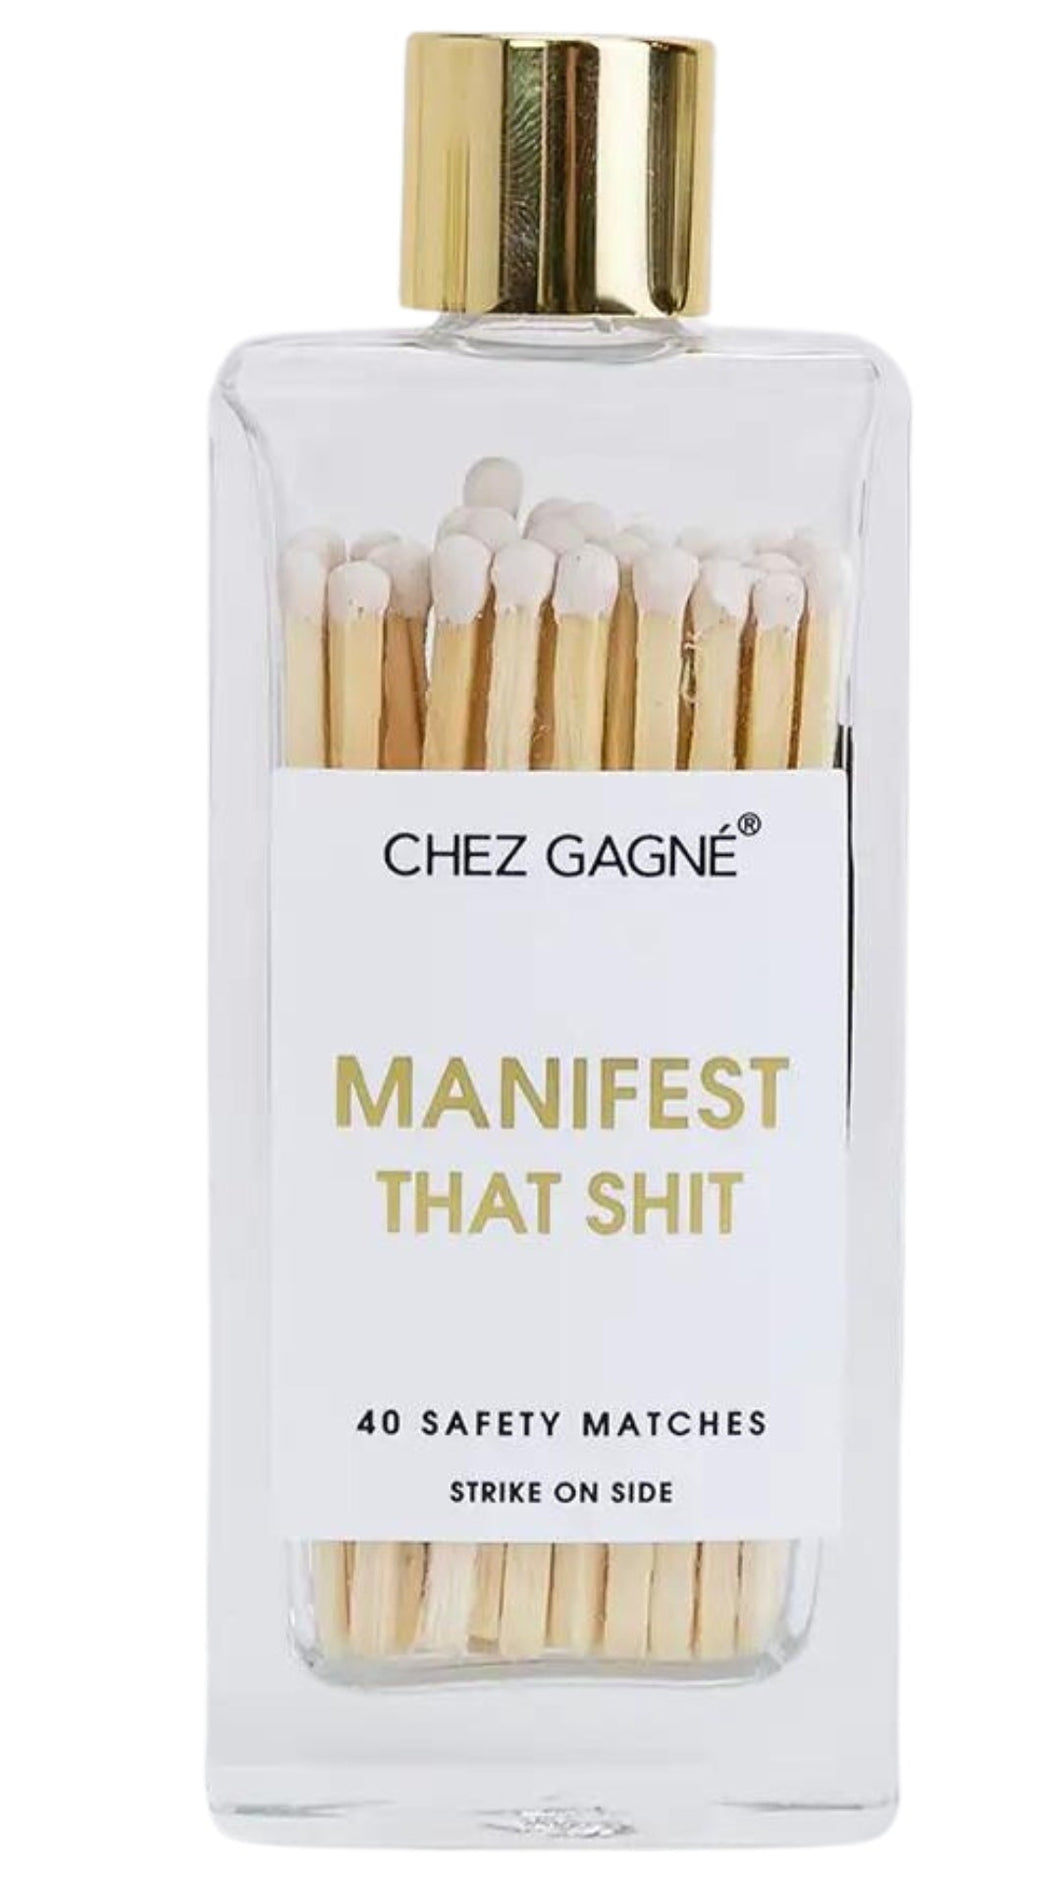 Manifest that Shit Matches